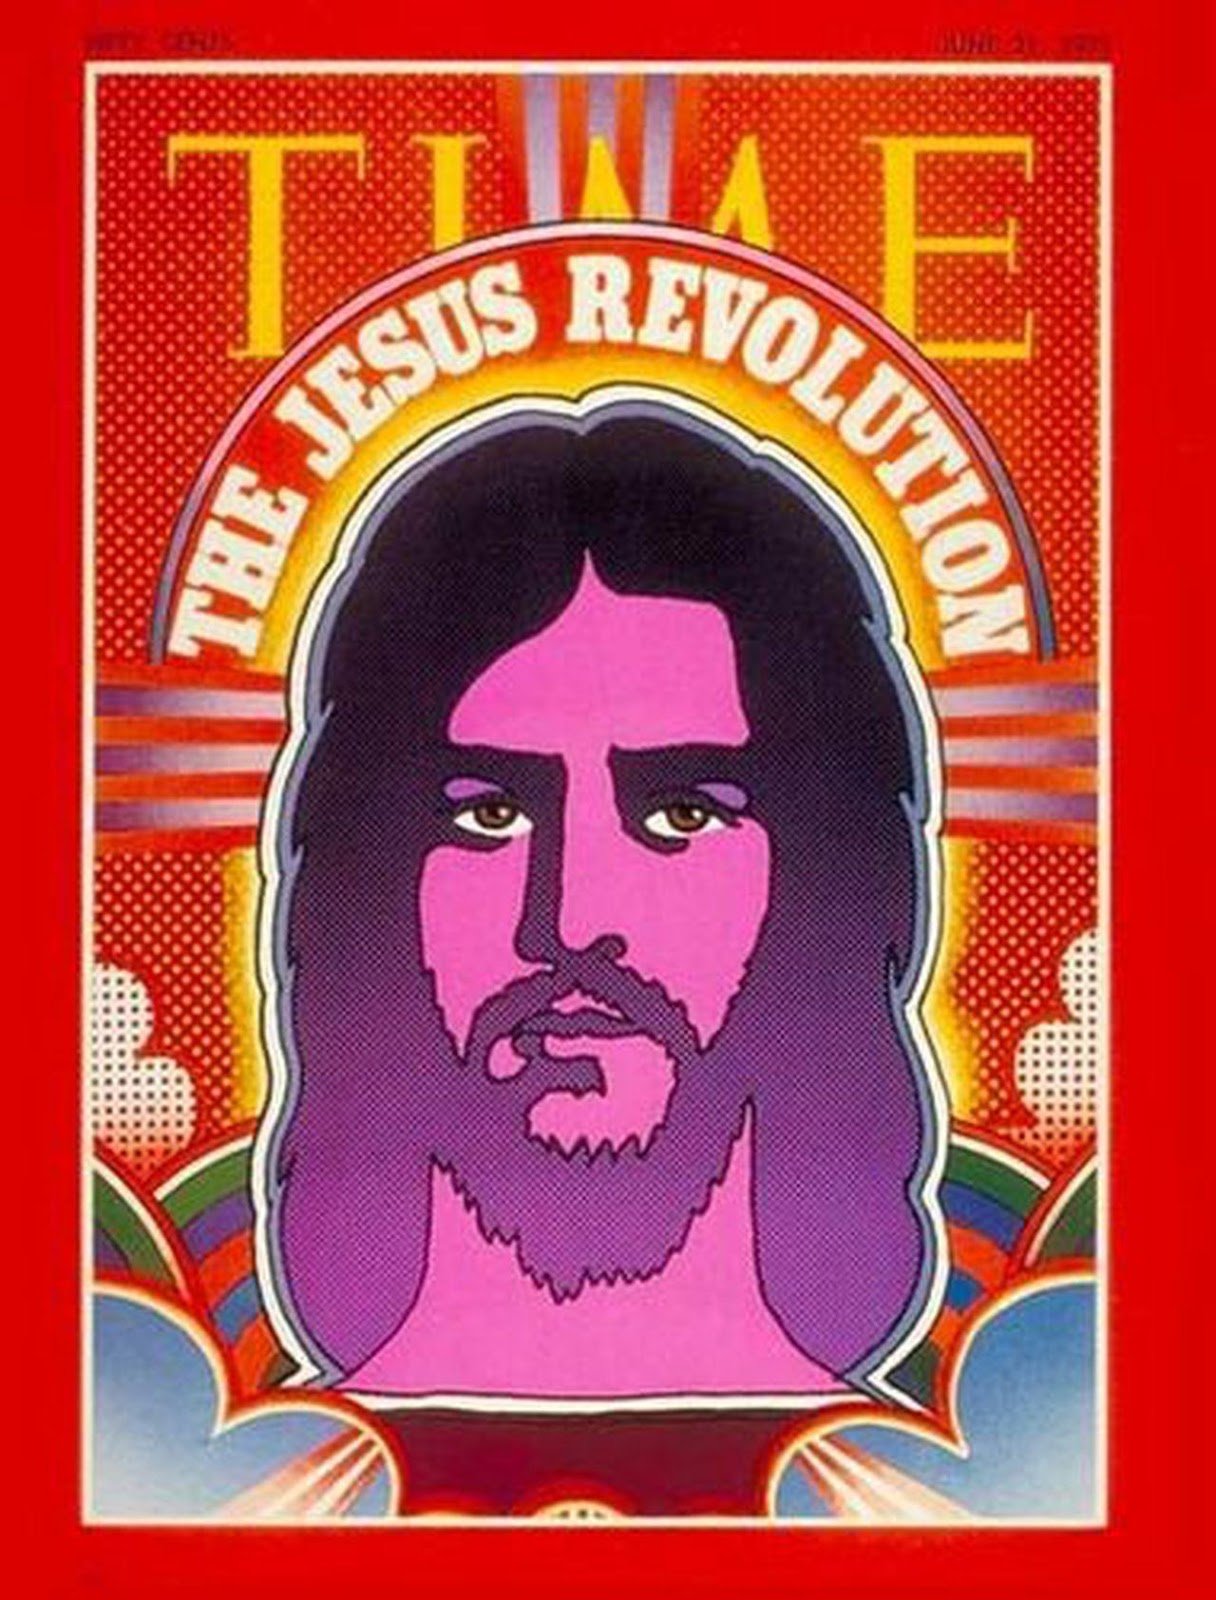 TIME MAGAZINE JESUS REVOLUTION COVER.